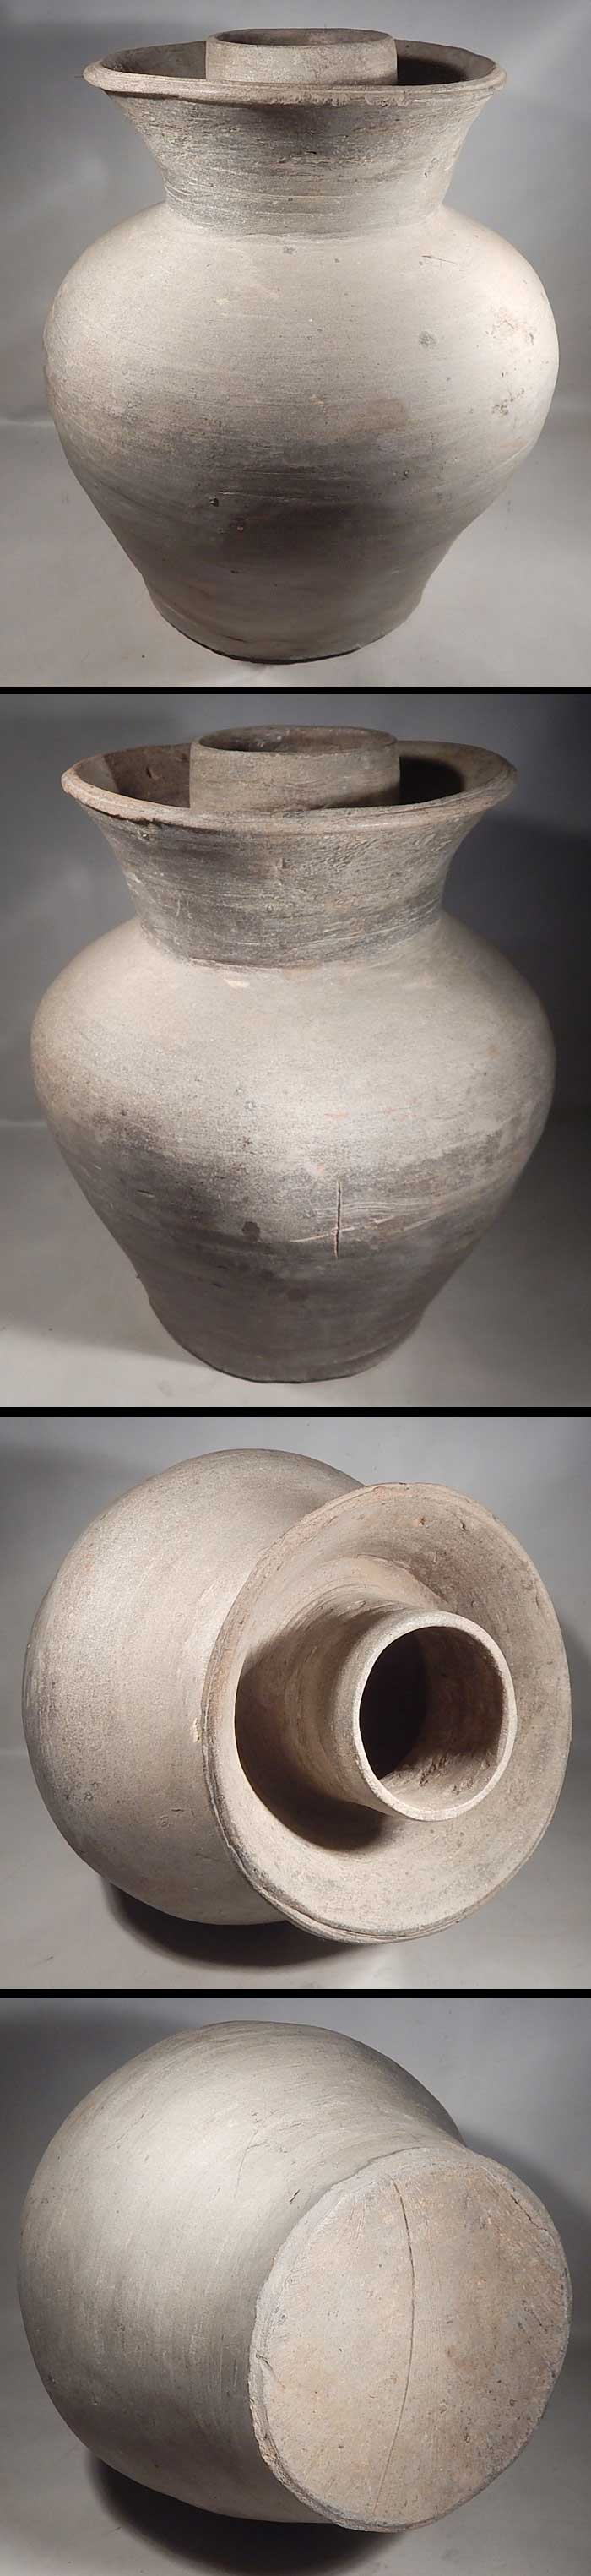 Han Dynasty Terracotta Pottery Storage Vessel